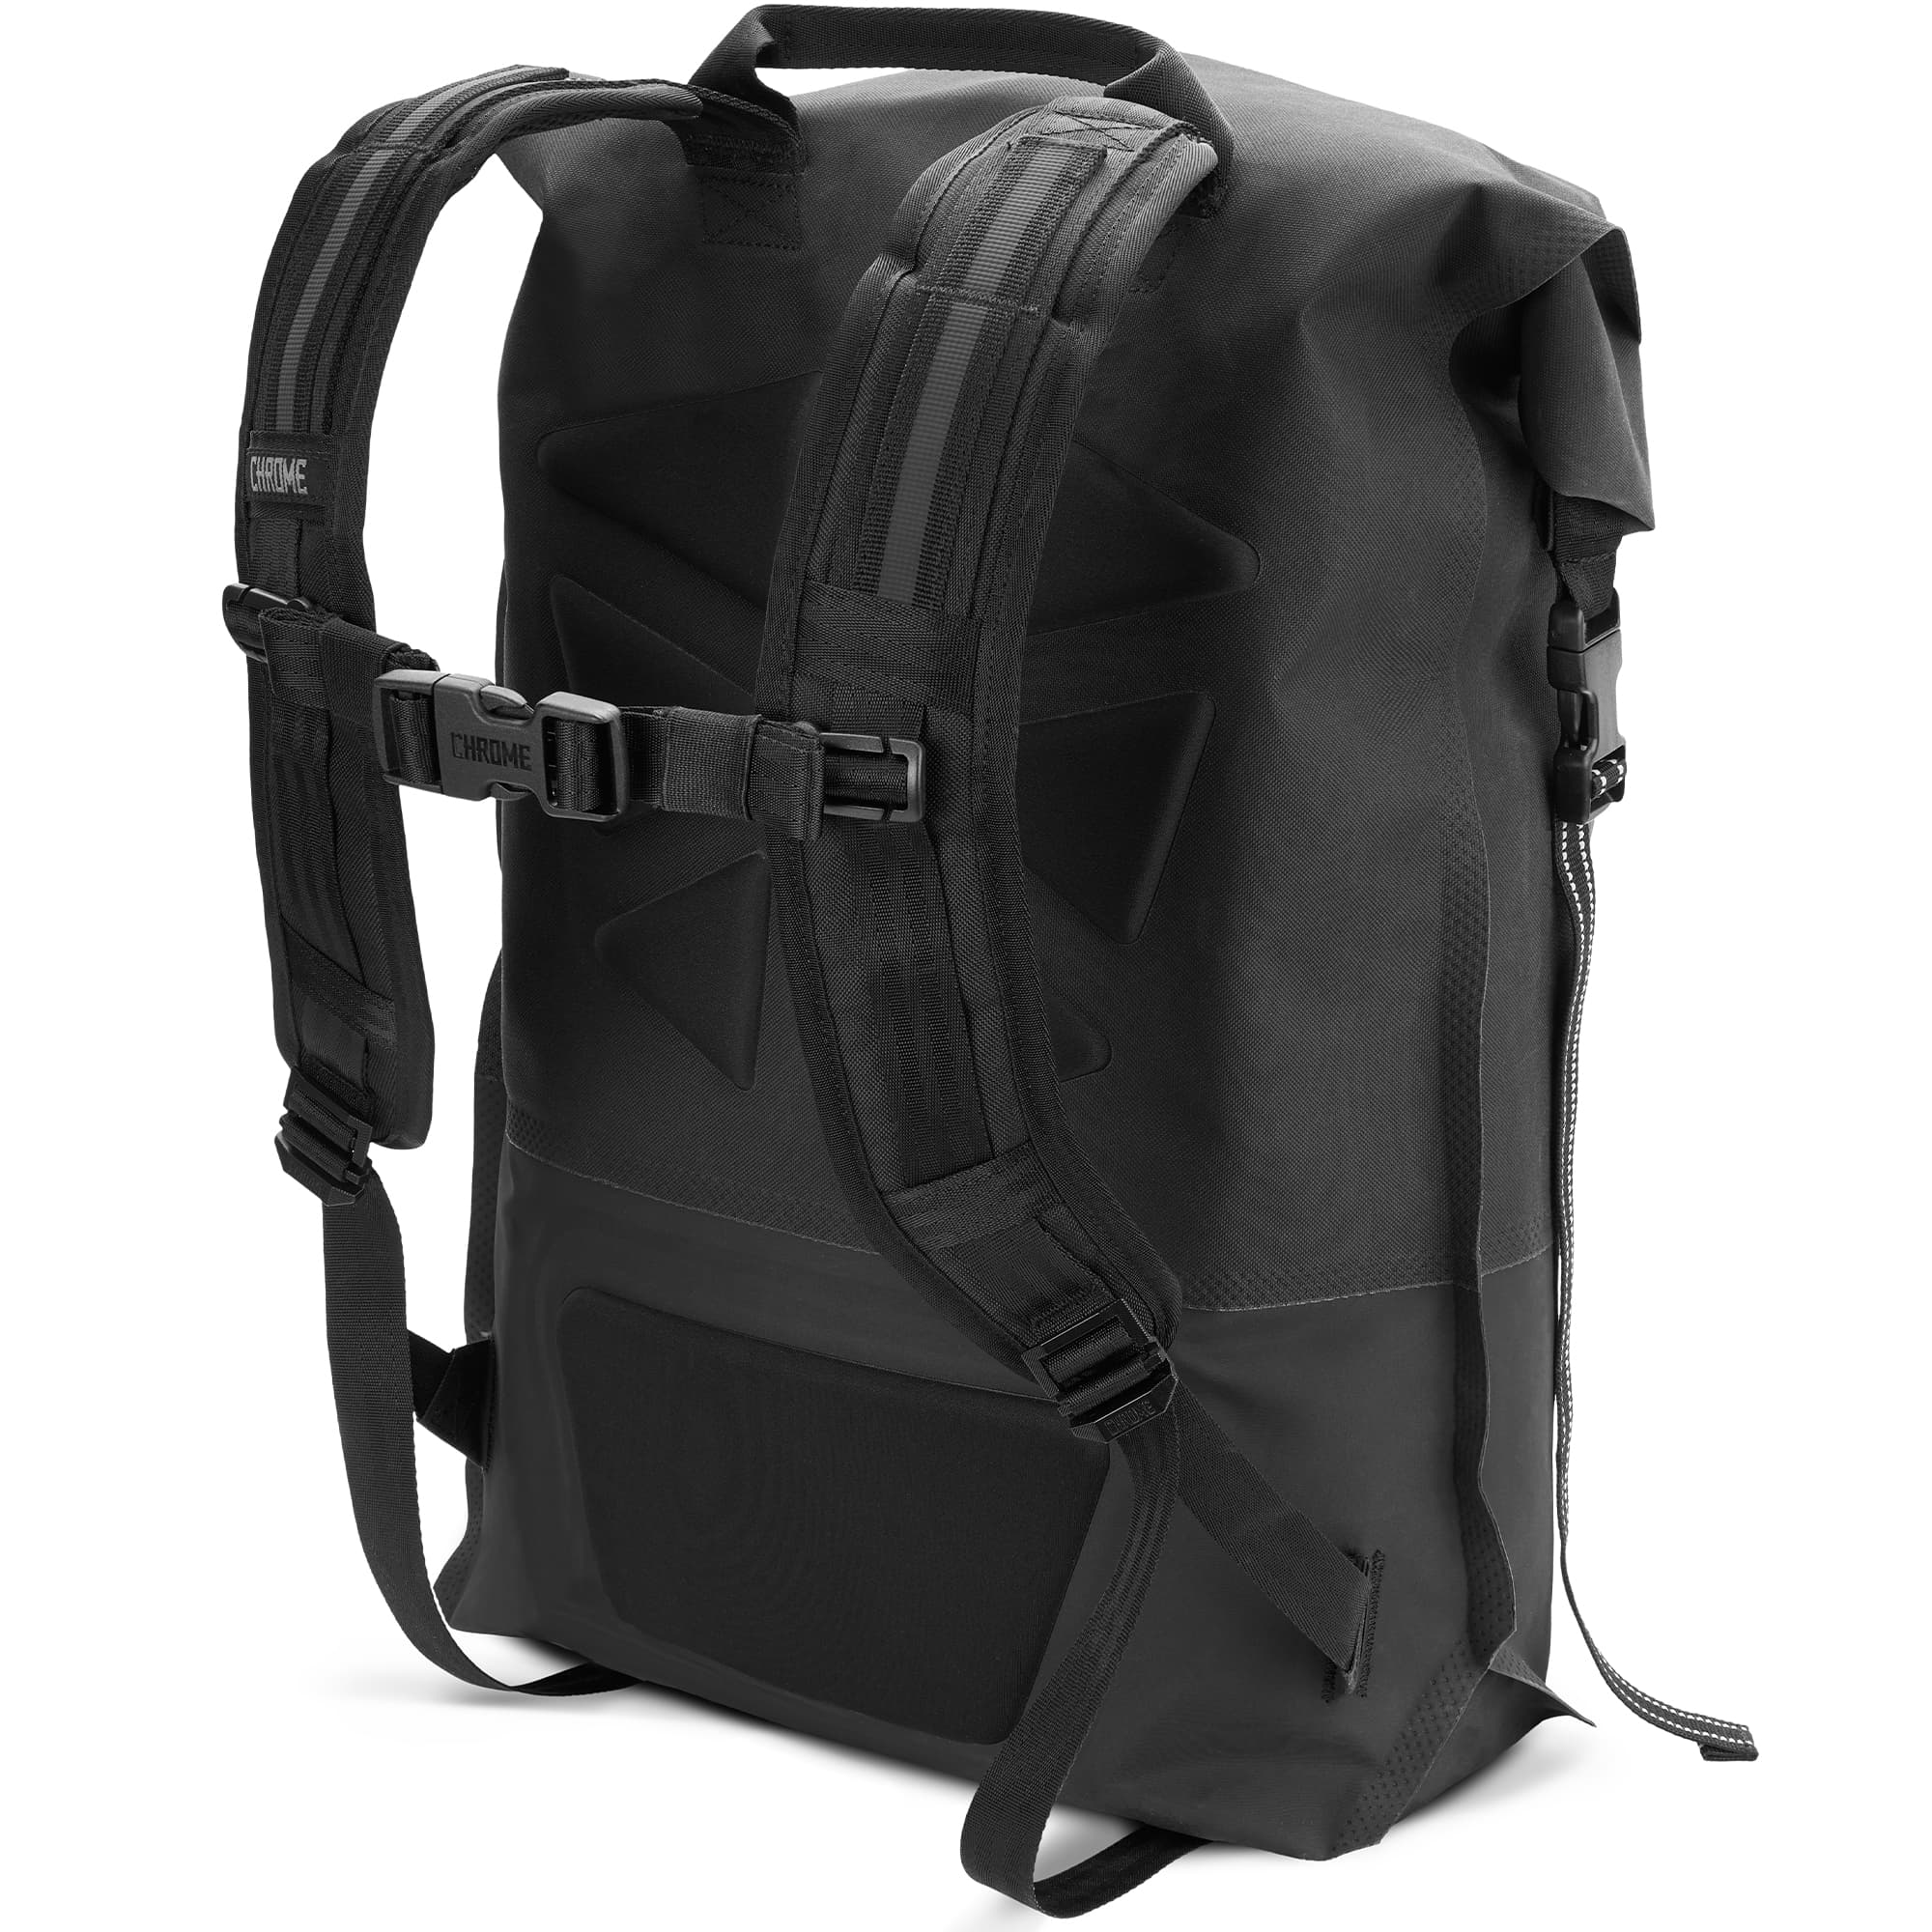 Waterproof 30L rolltop backpack in black harness view #color_black